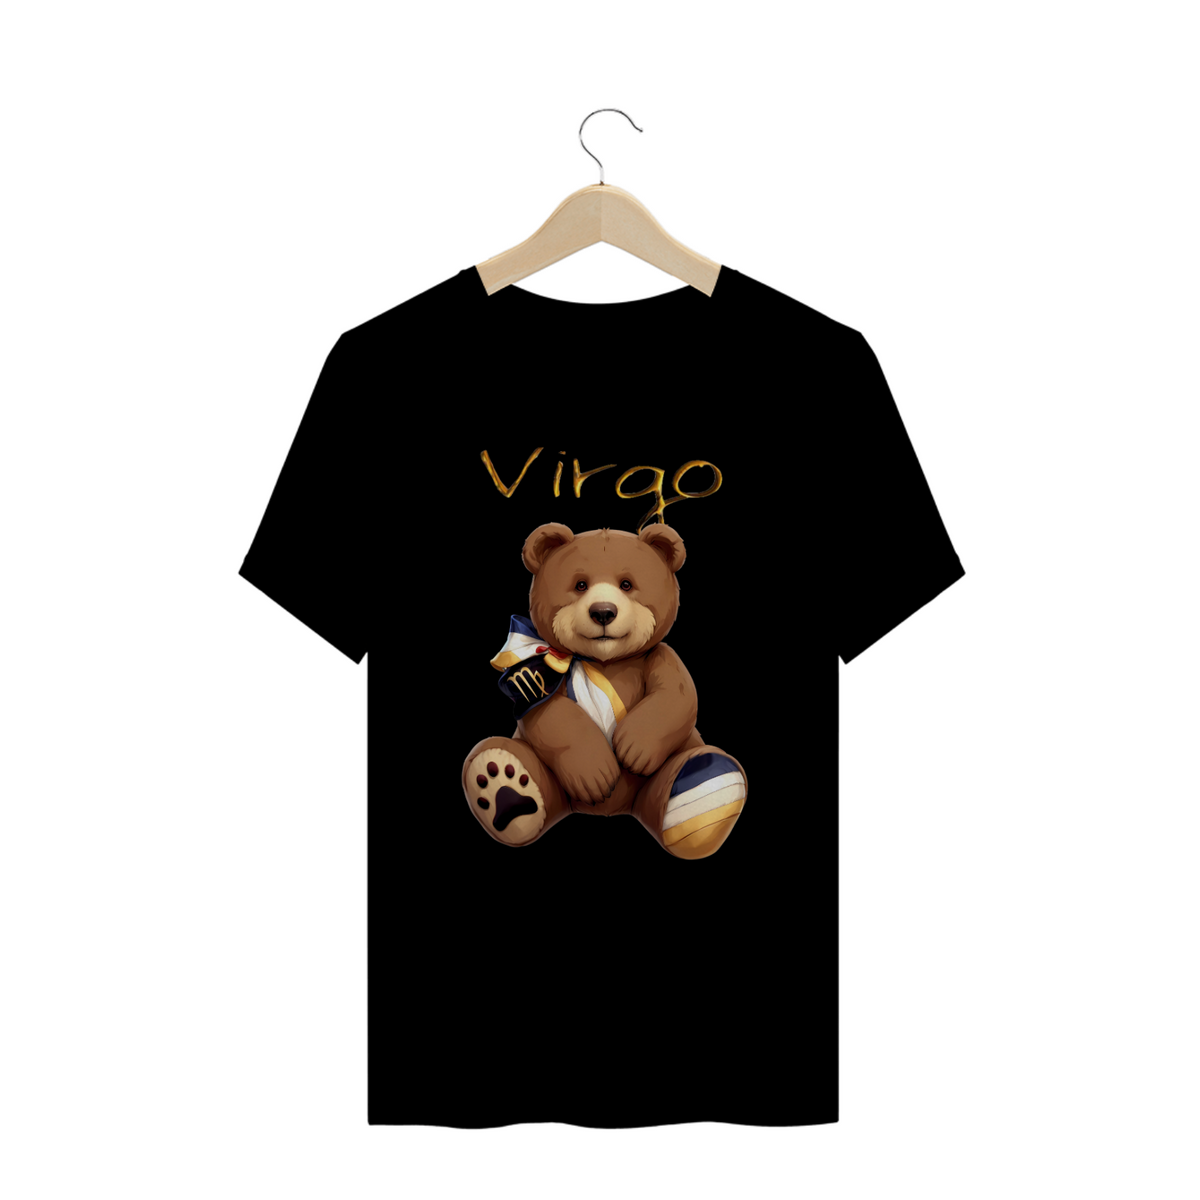 Nome do produto: Nino Virgo - Plus Size